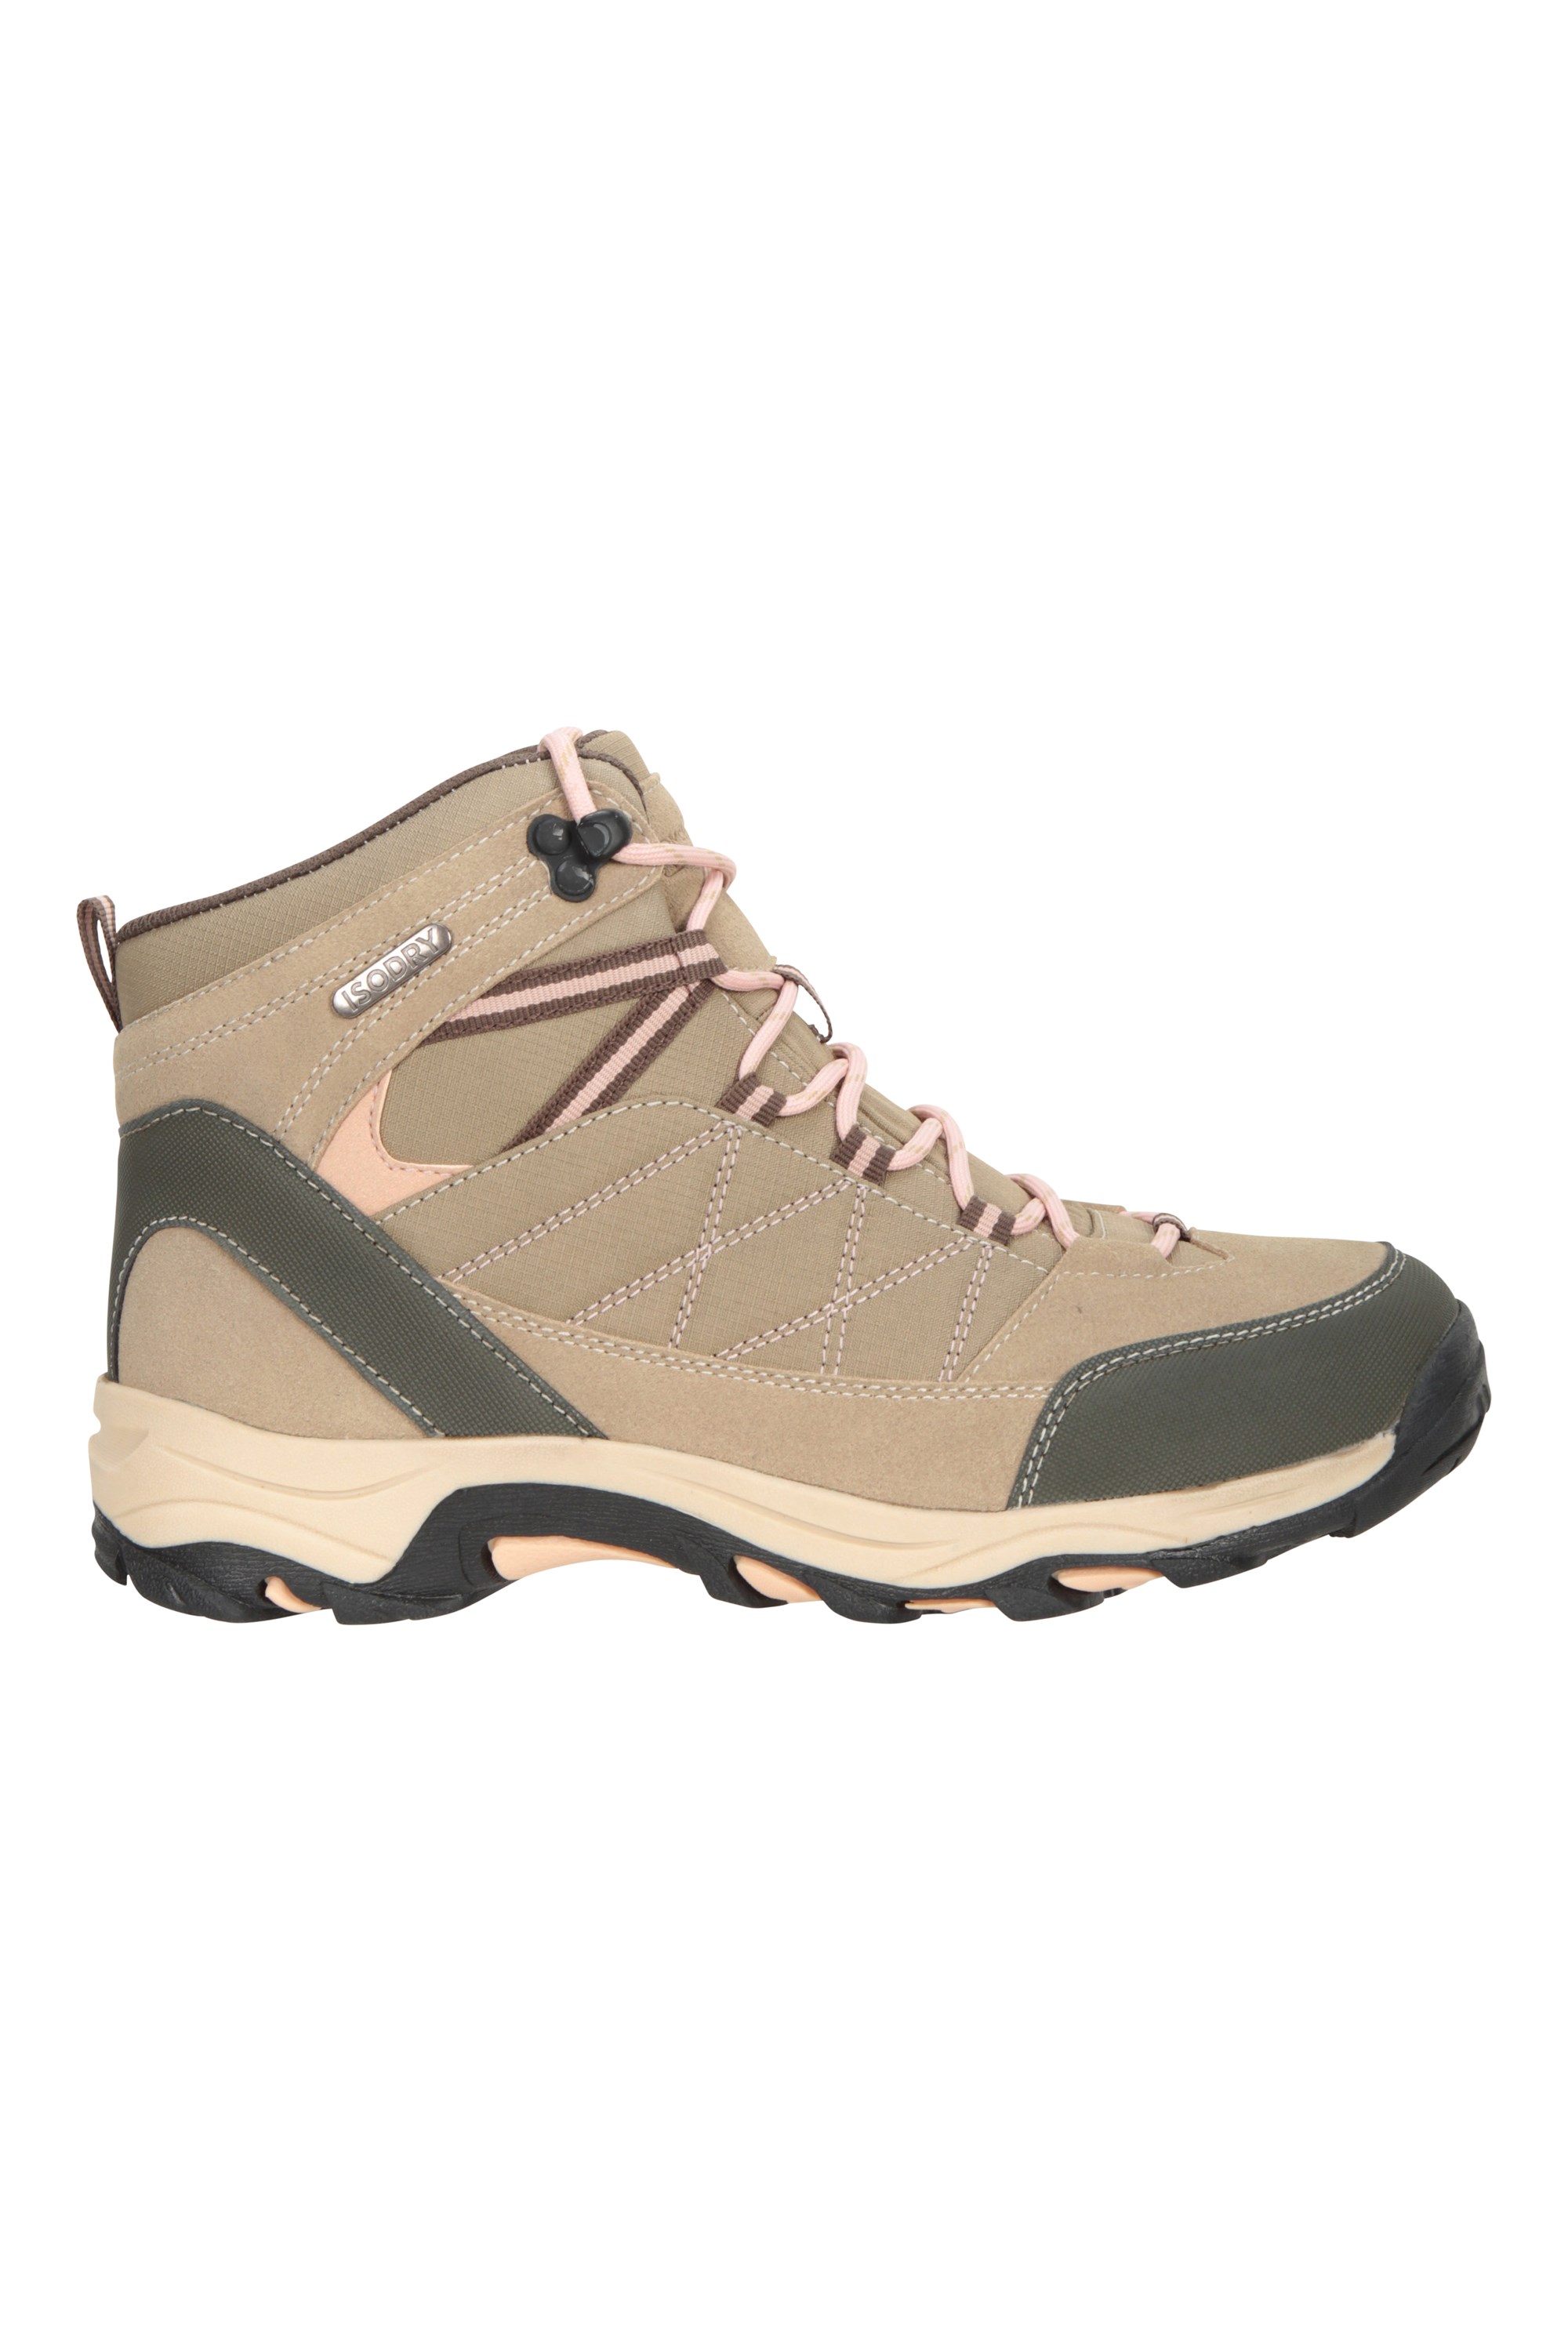 Details about   Mountain Warehouse Womens Waterproof Hiking Boots Walking Trekking Ladies Boot 